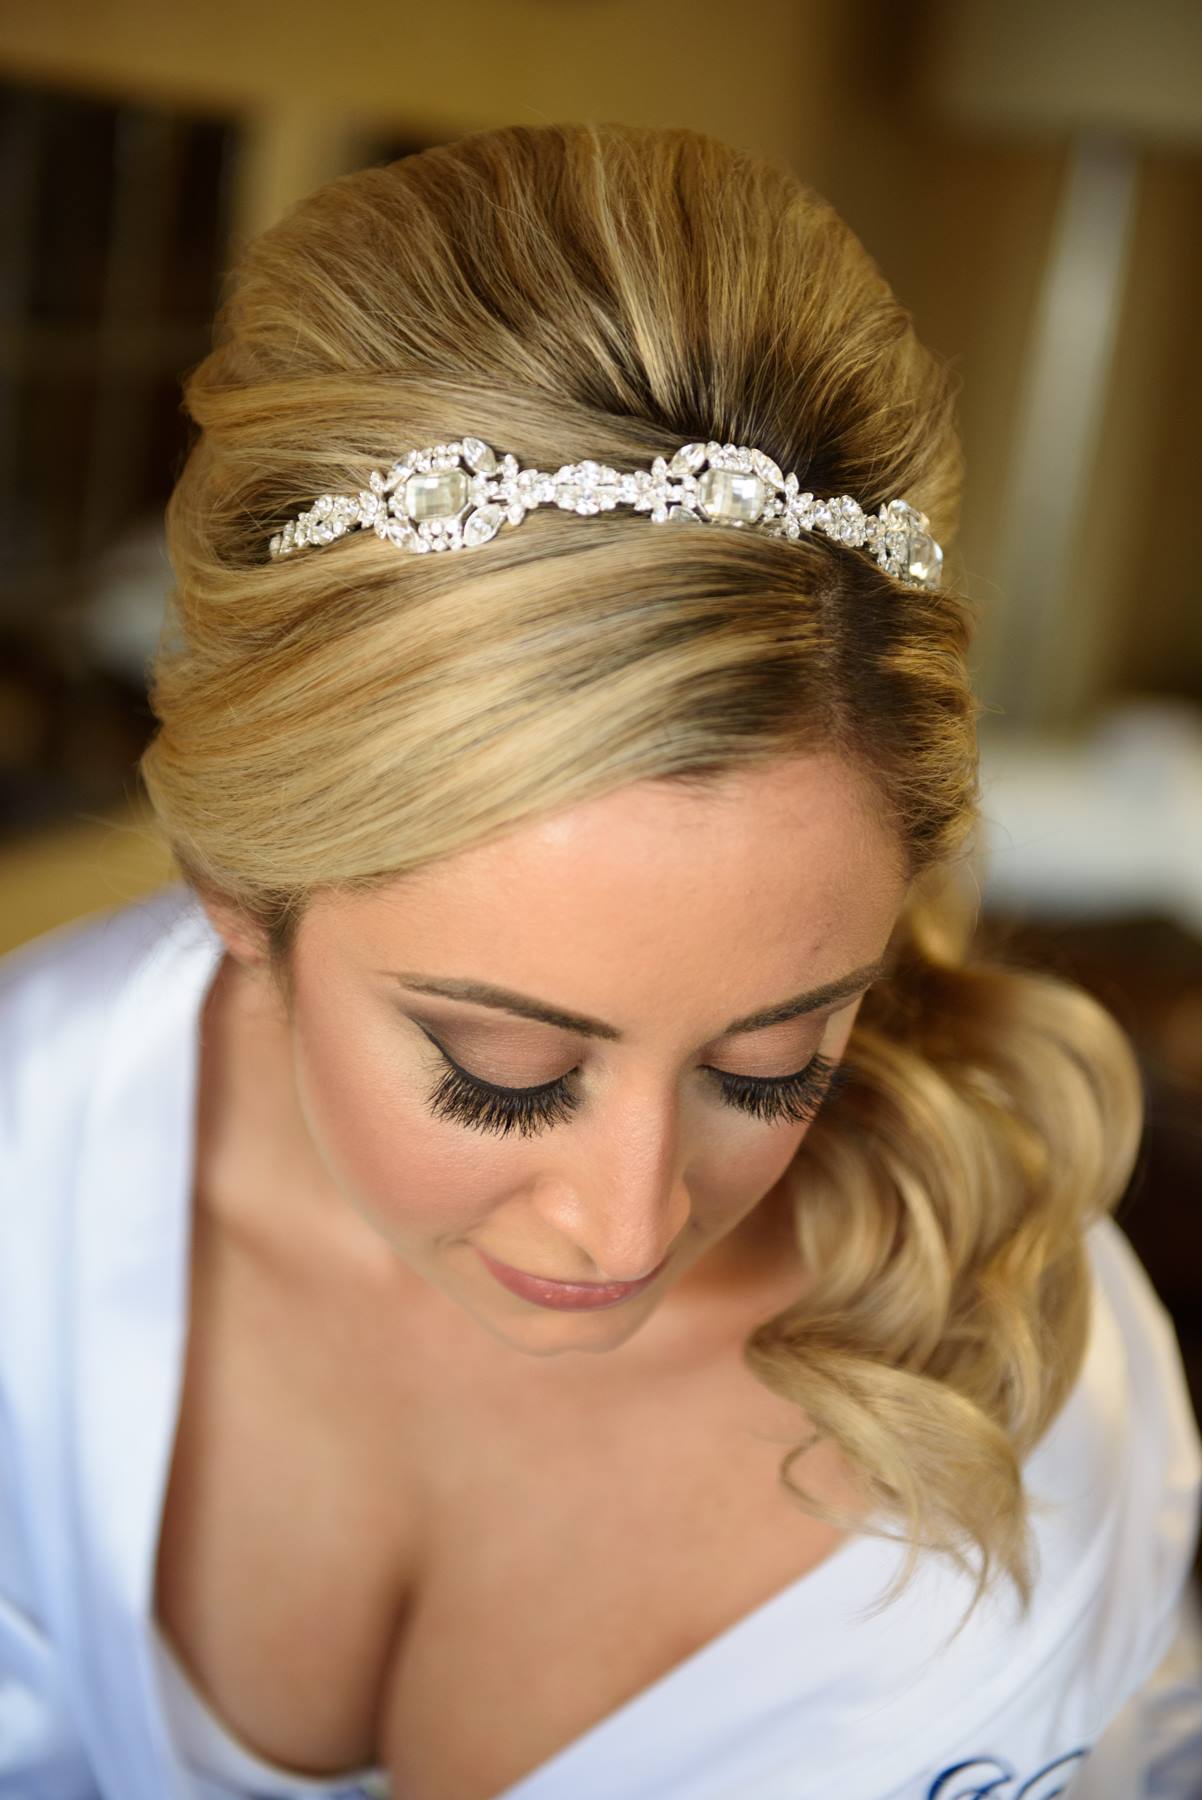 jeweled-headband-in-bride's-hair.jpg